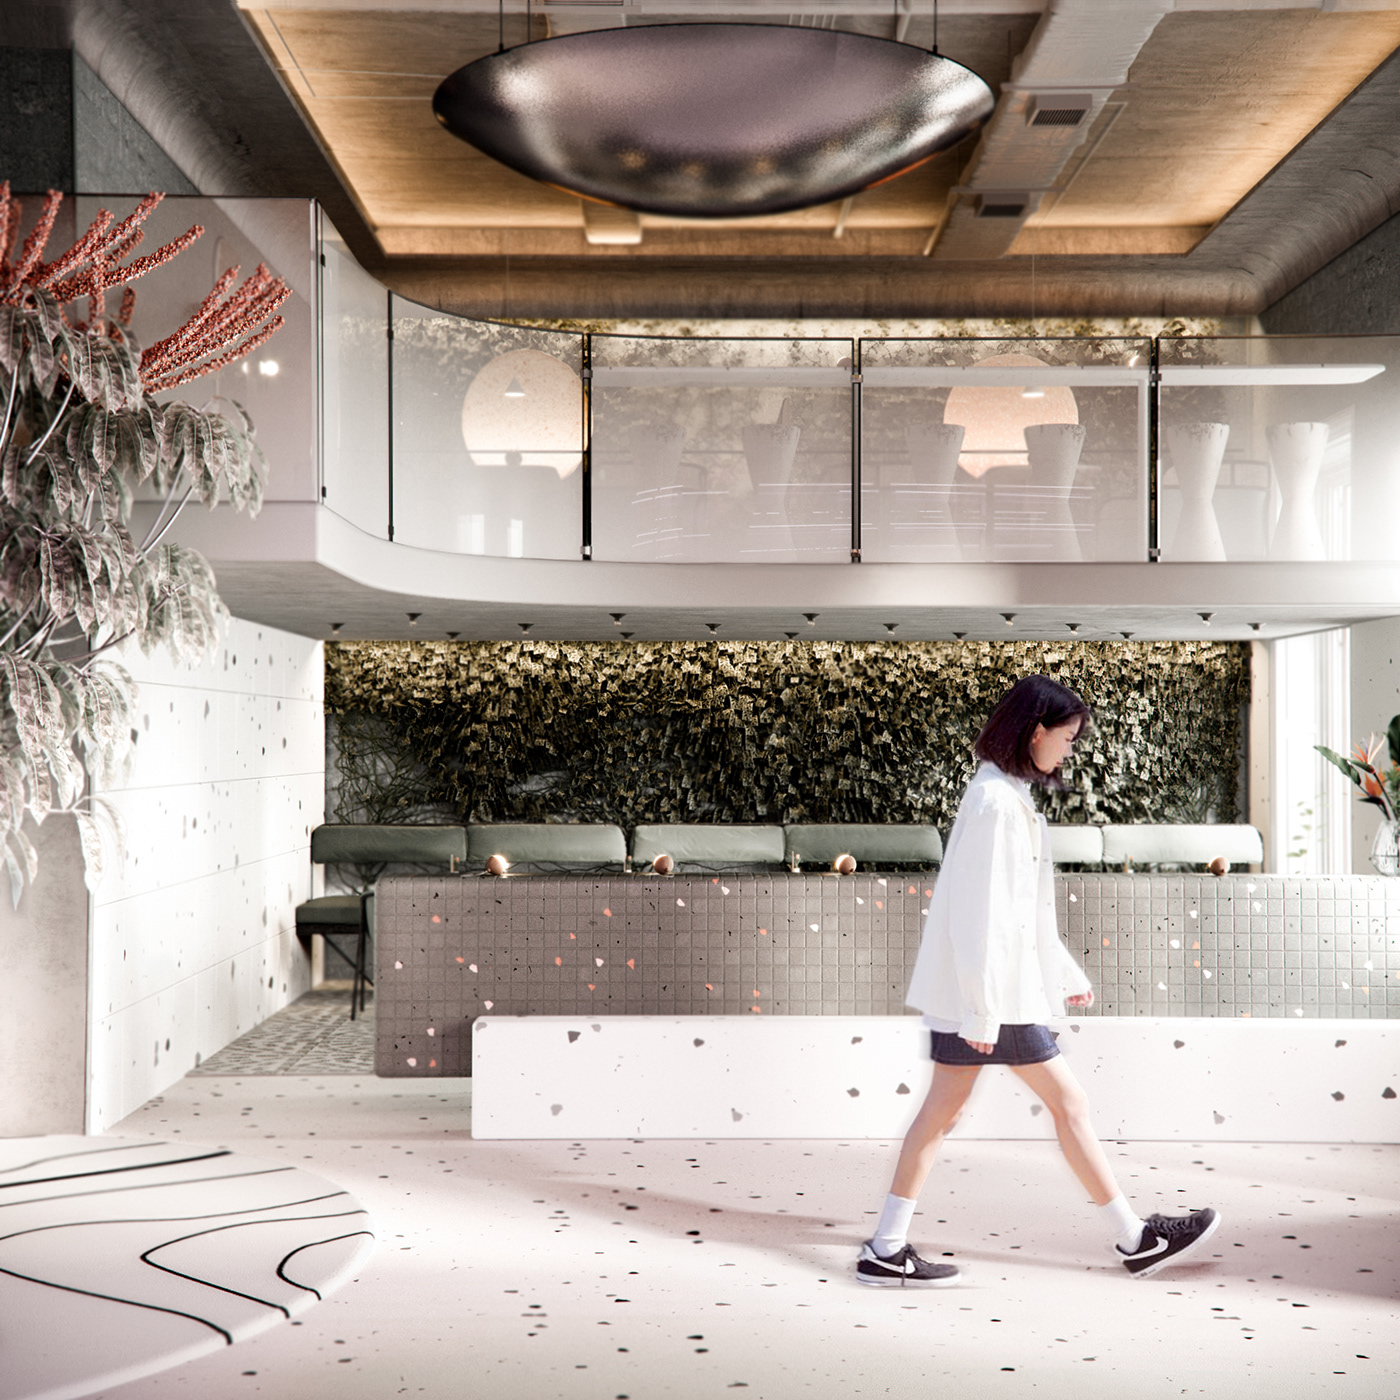 hydroponics restaurant cafe Interior interior design  recycle zero waste